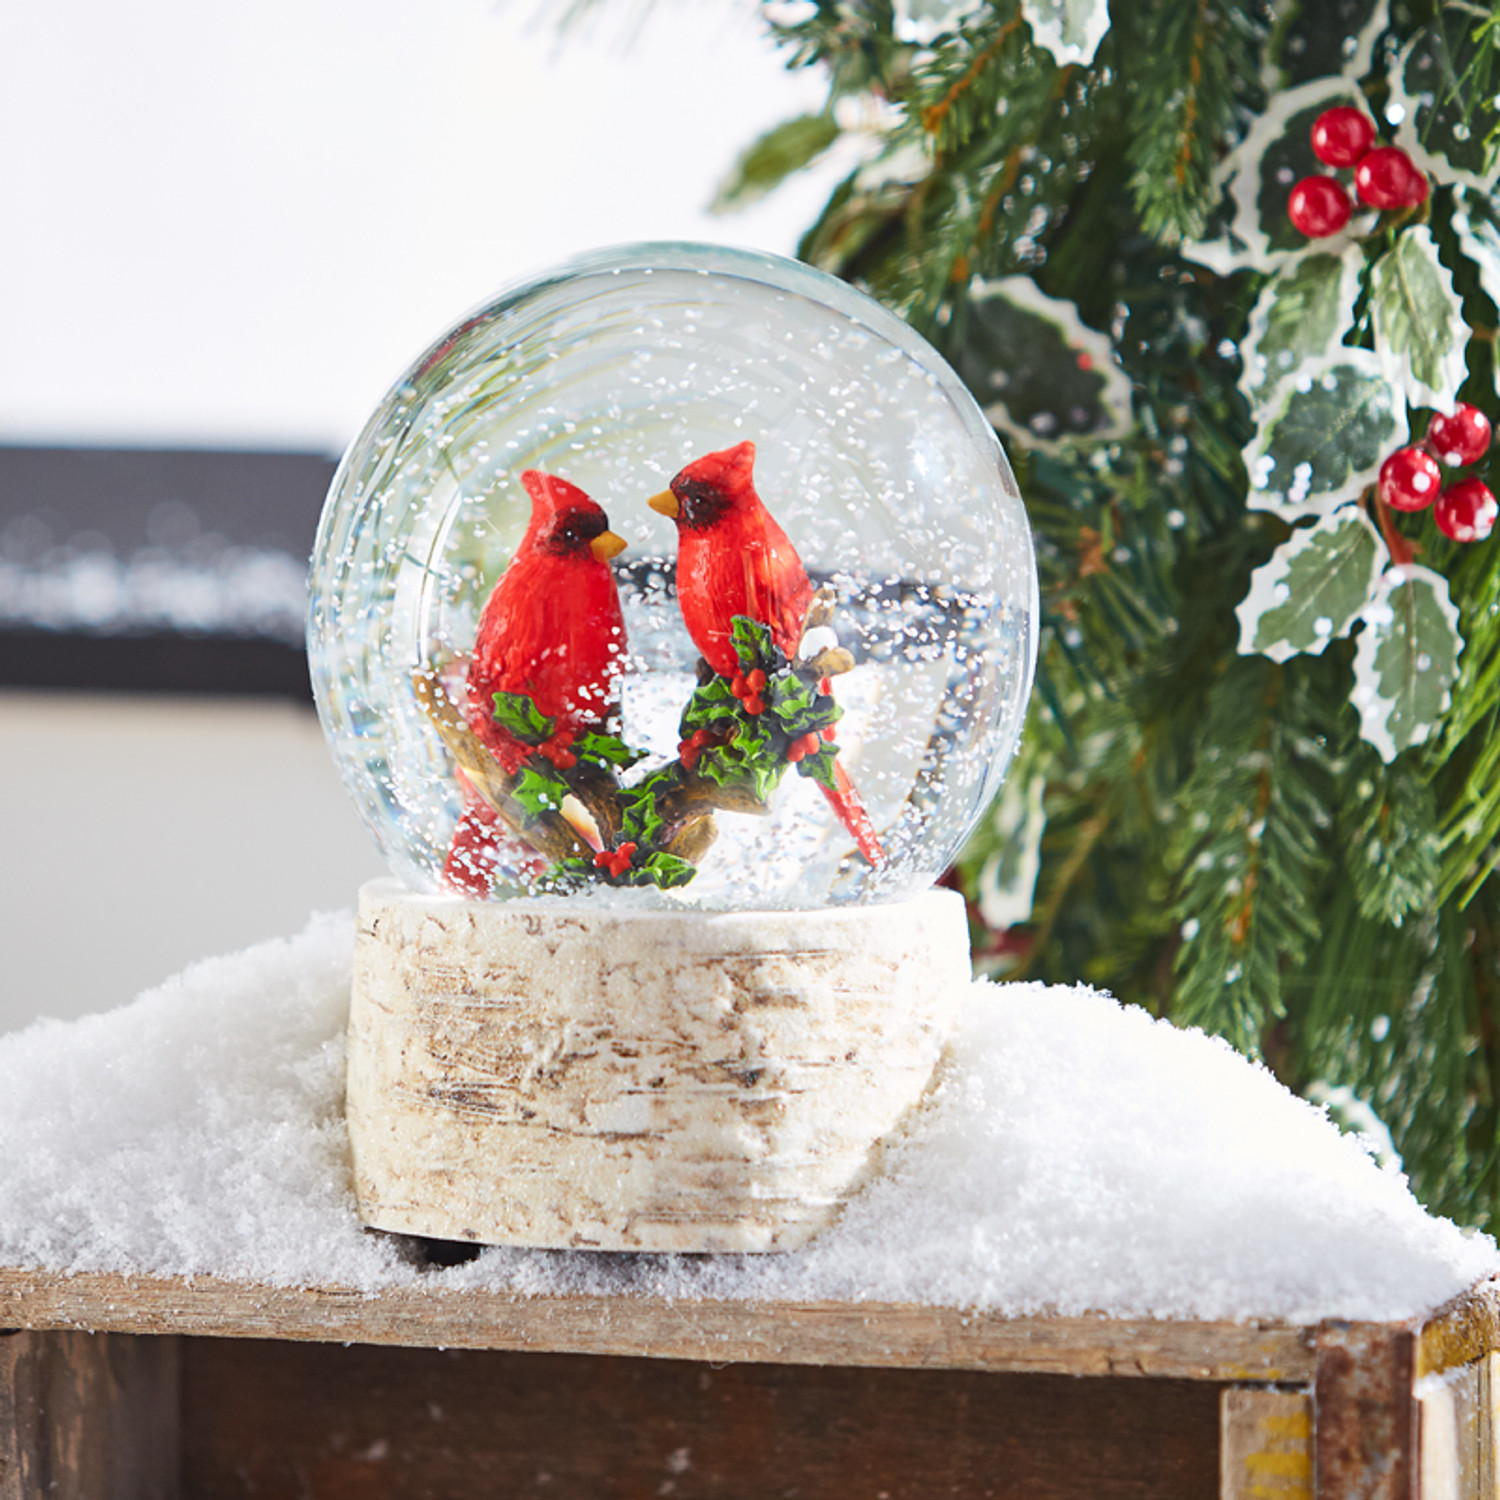 DIY Star Wars Glowing Snow Globe Holiday Ornament